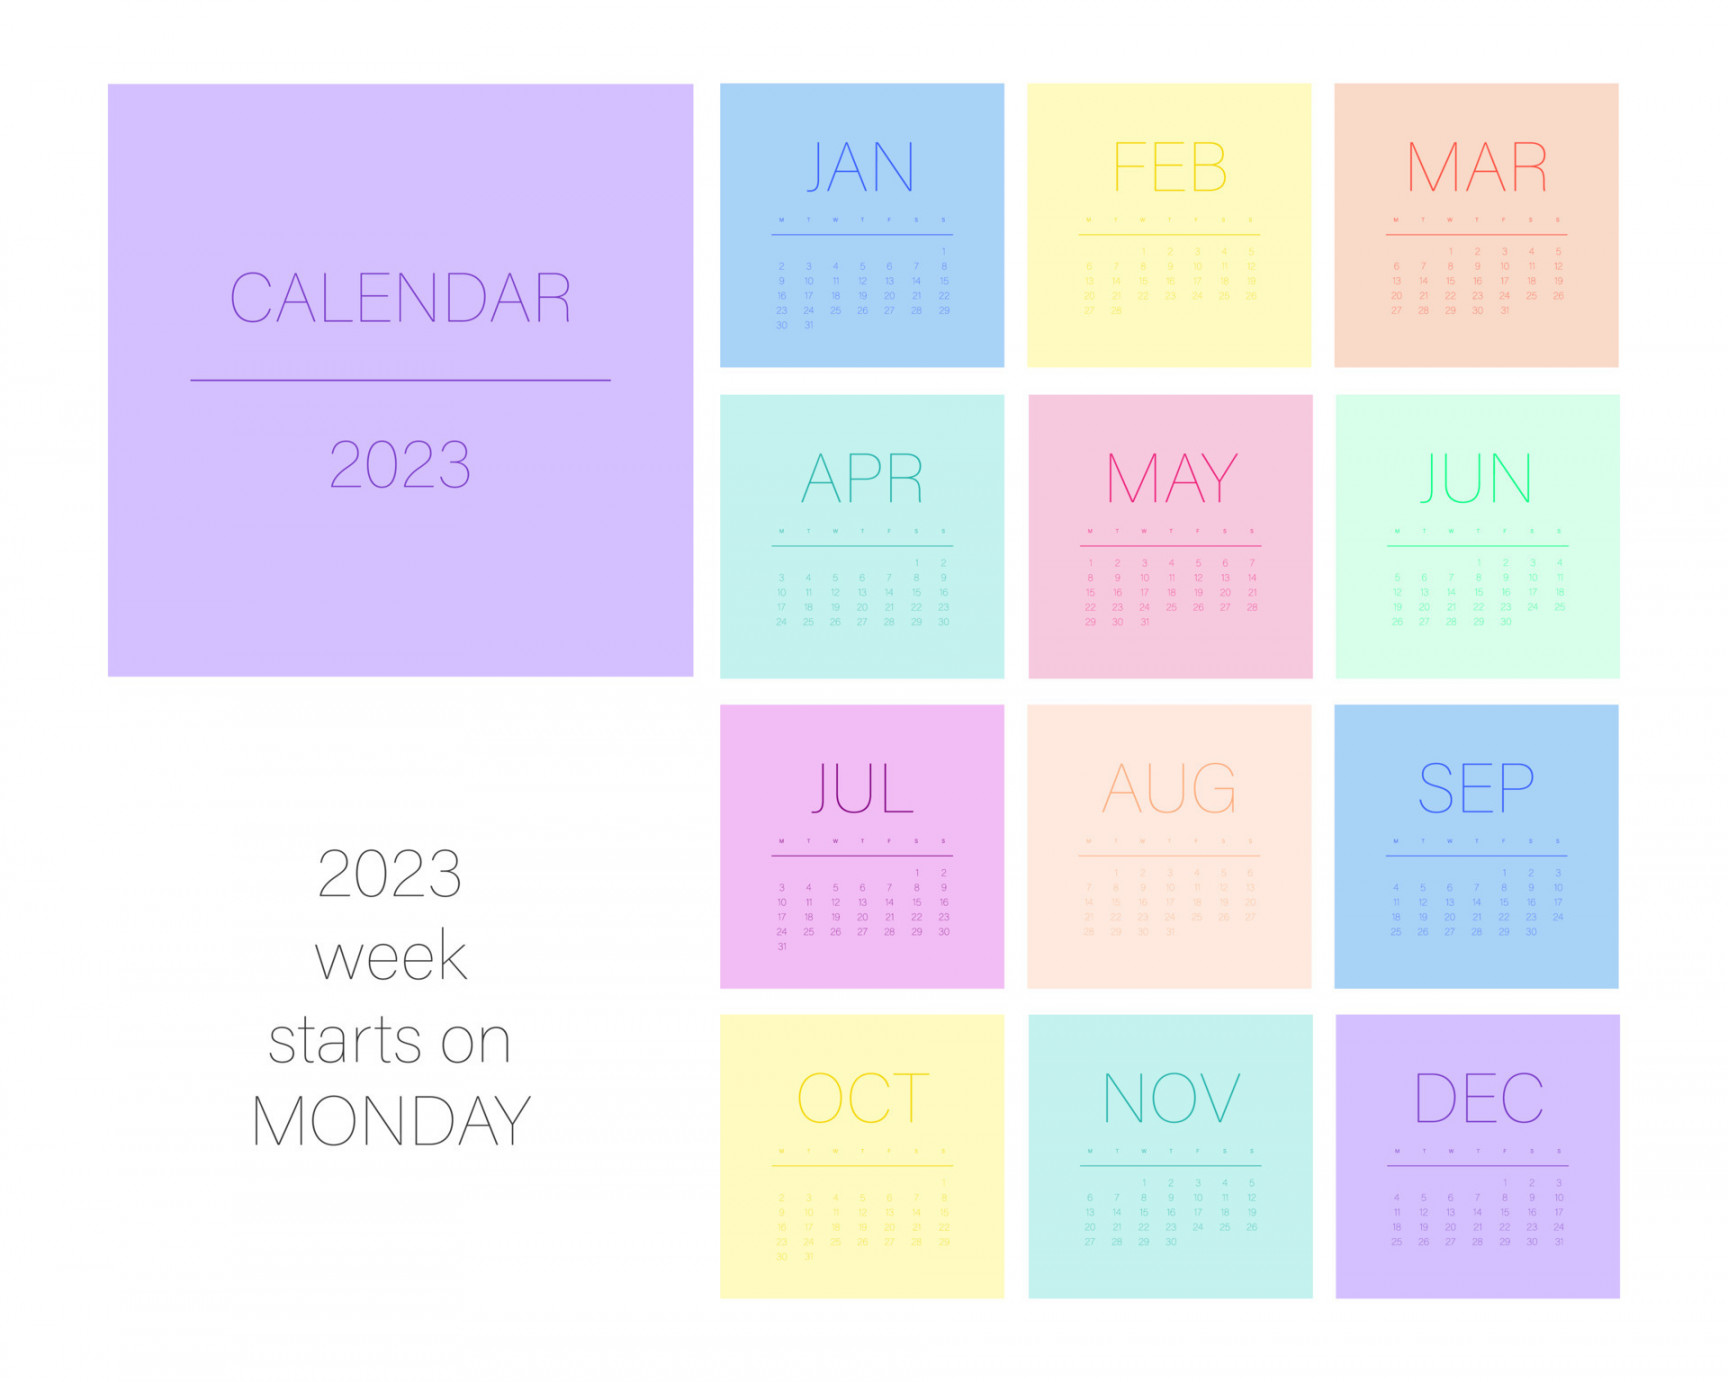 Calendar template for